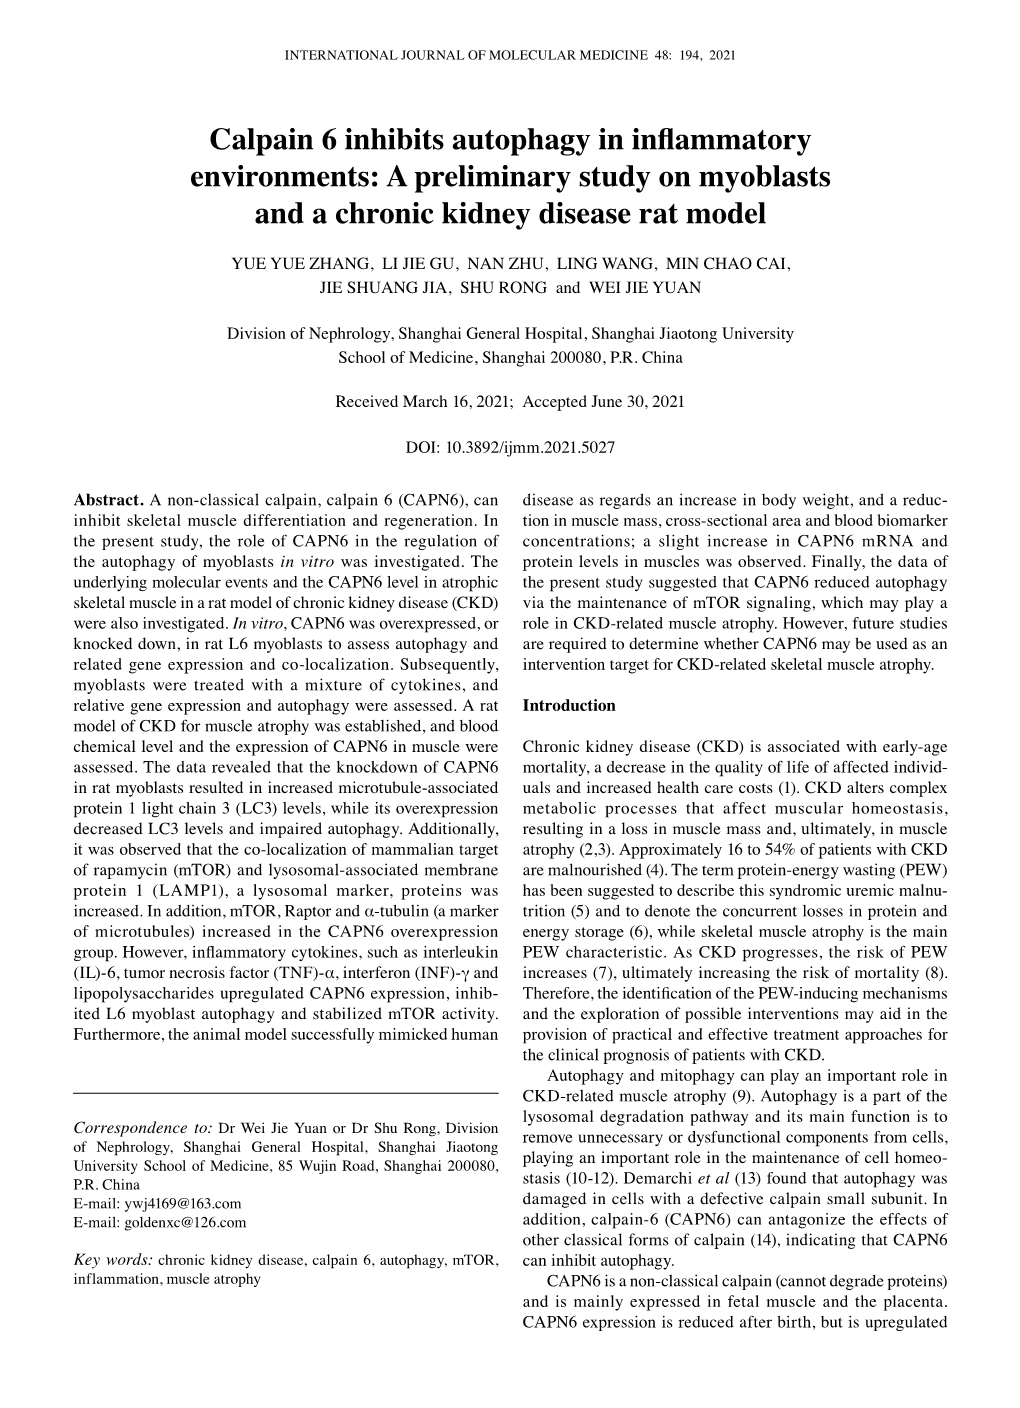 Calpain 6 Inhibits Autophagy in Inflammatory Environments: a Preliminary Study on Myoblasts and a Chronic Kidney Disease Rat Model